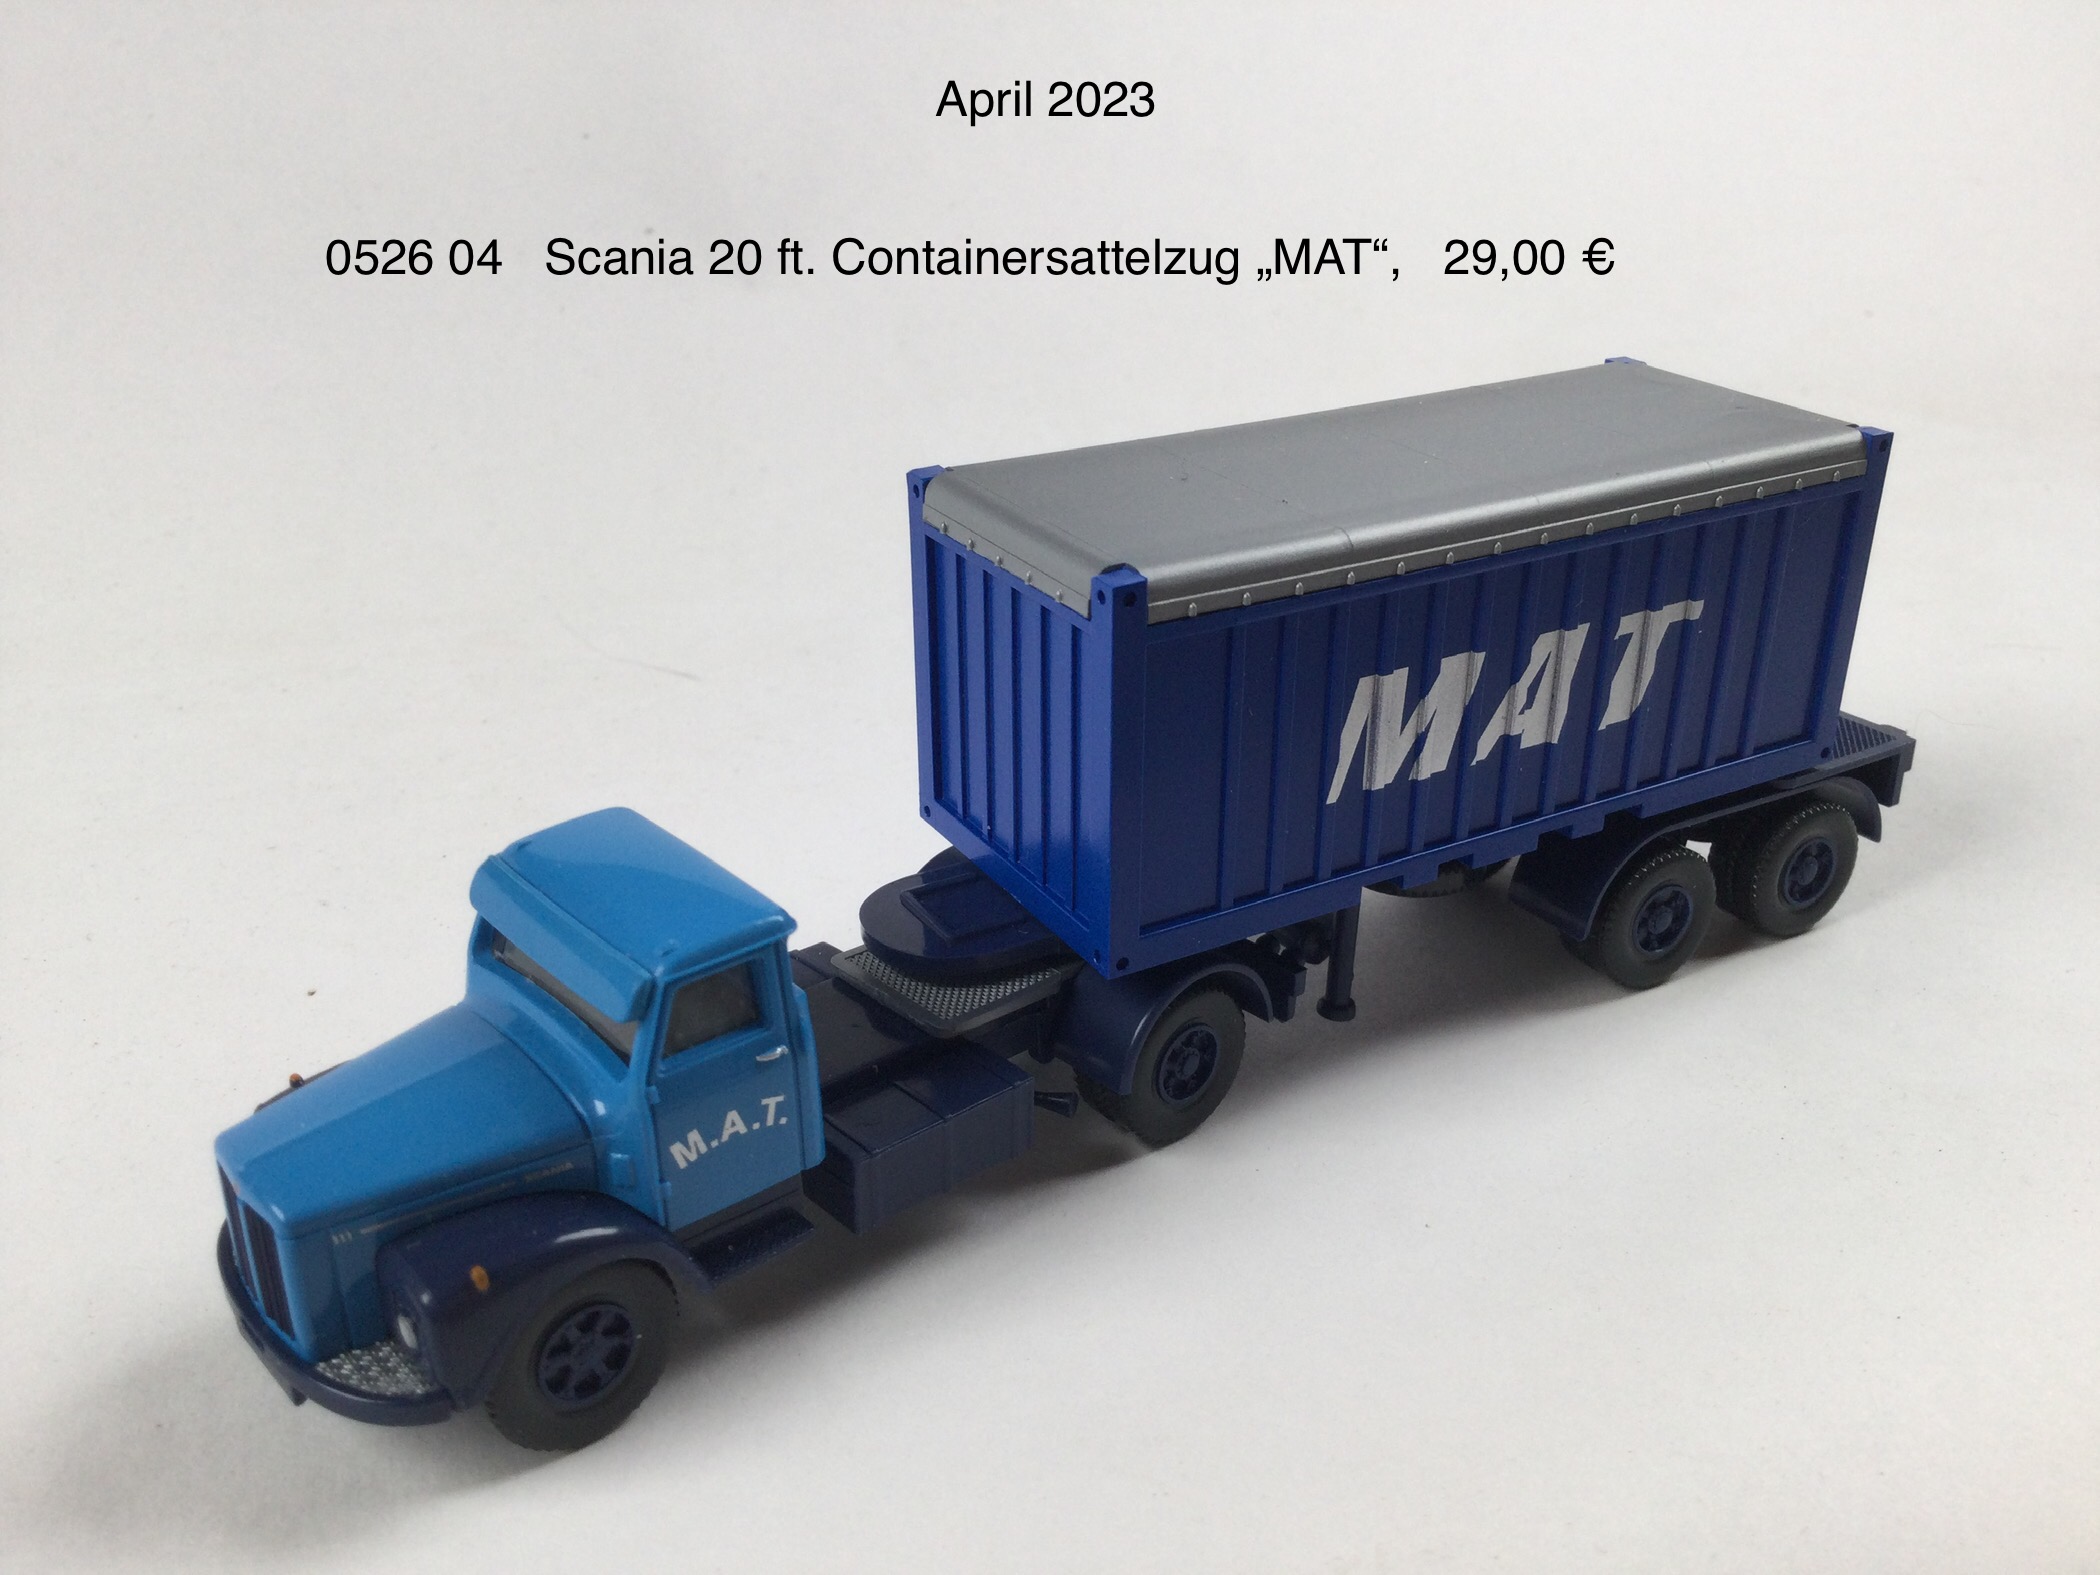 Scania 20ft. Containersattelzug "Mat"